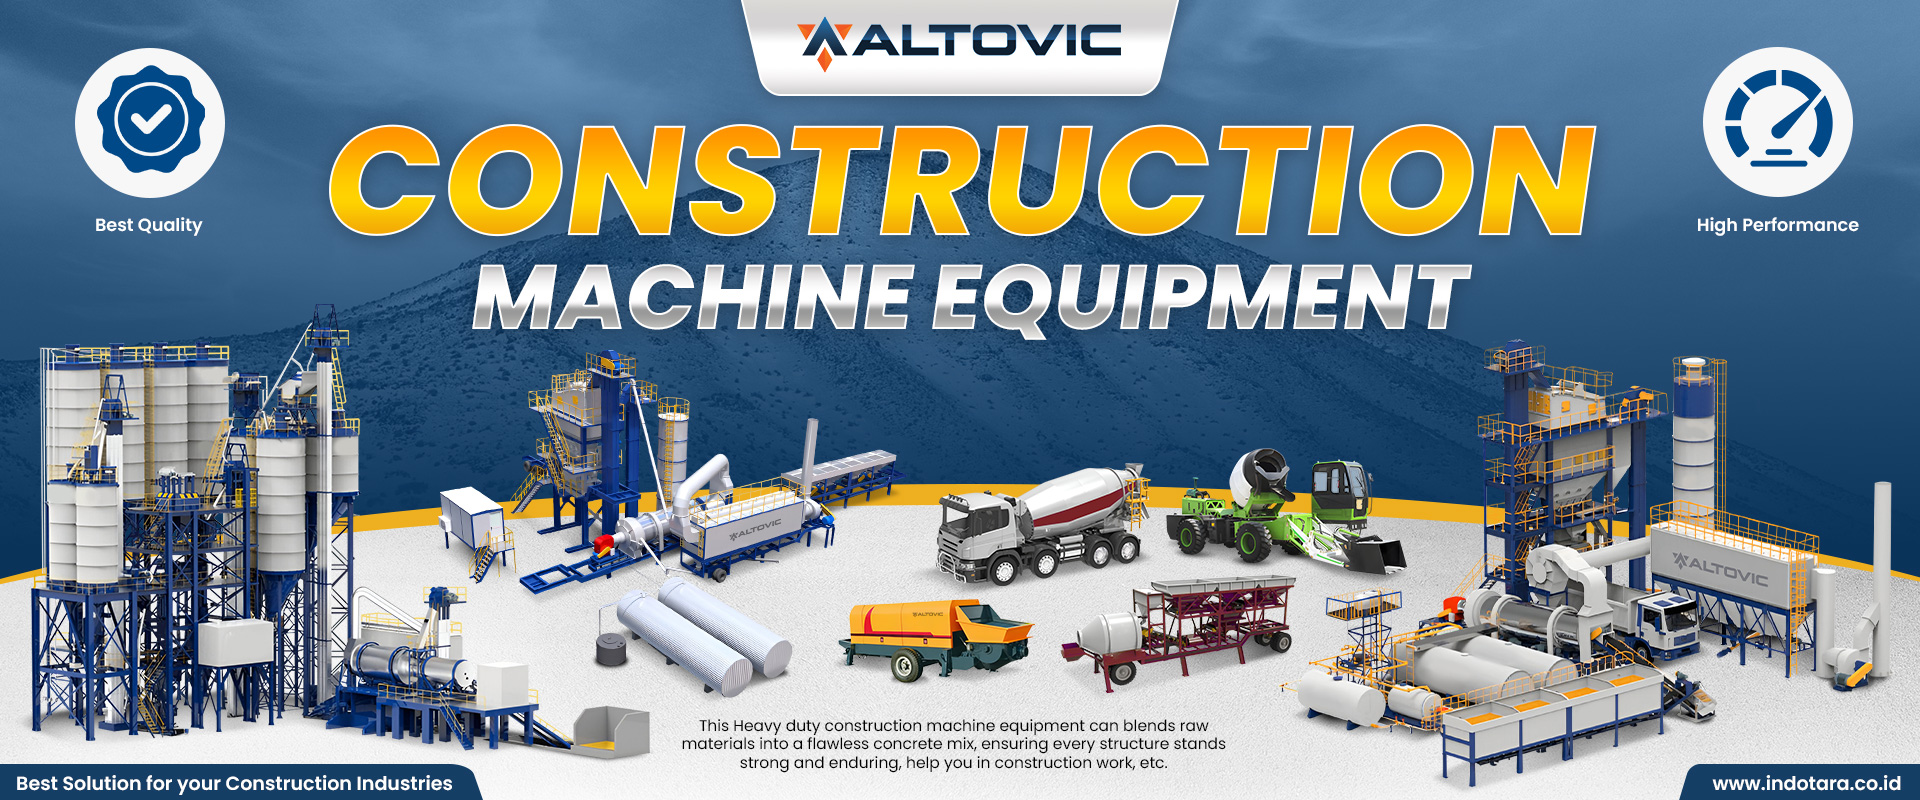 Altovic Construction Machine